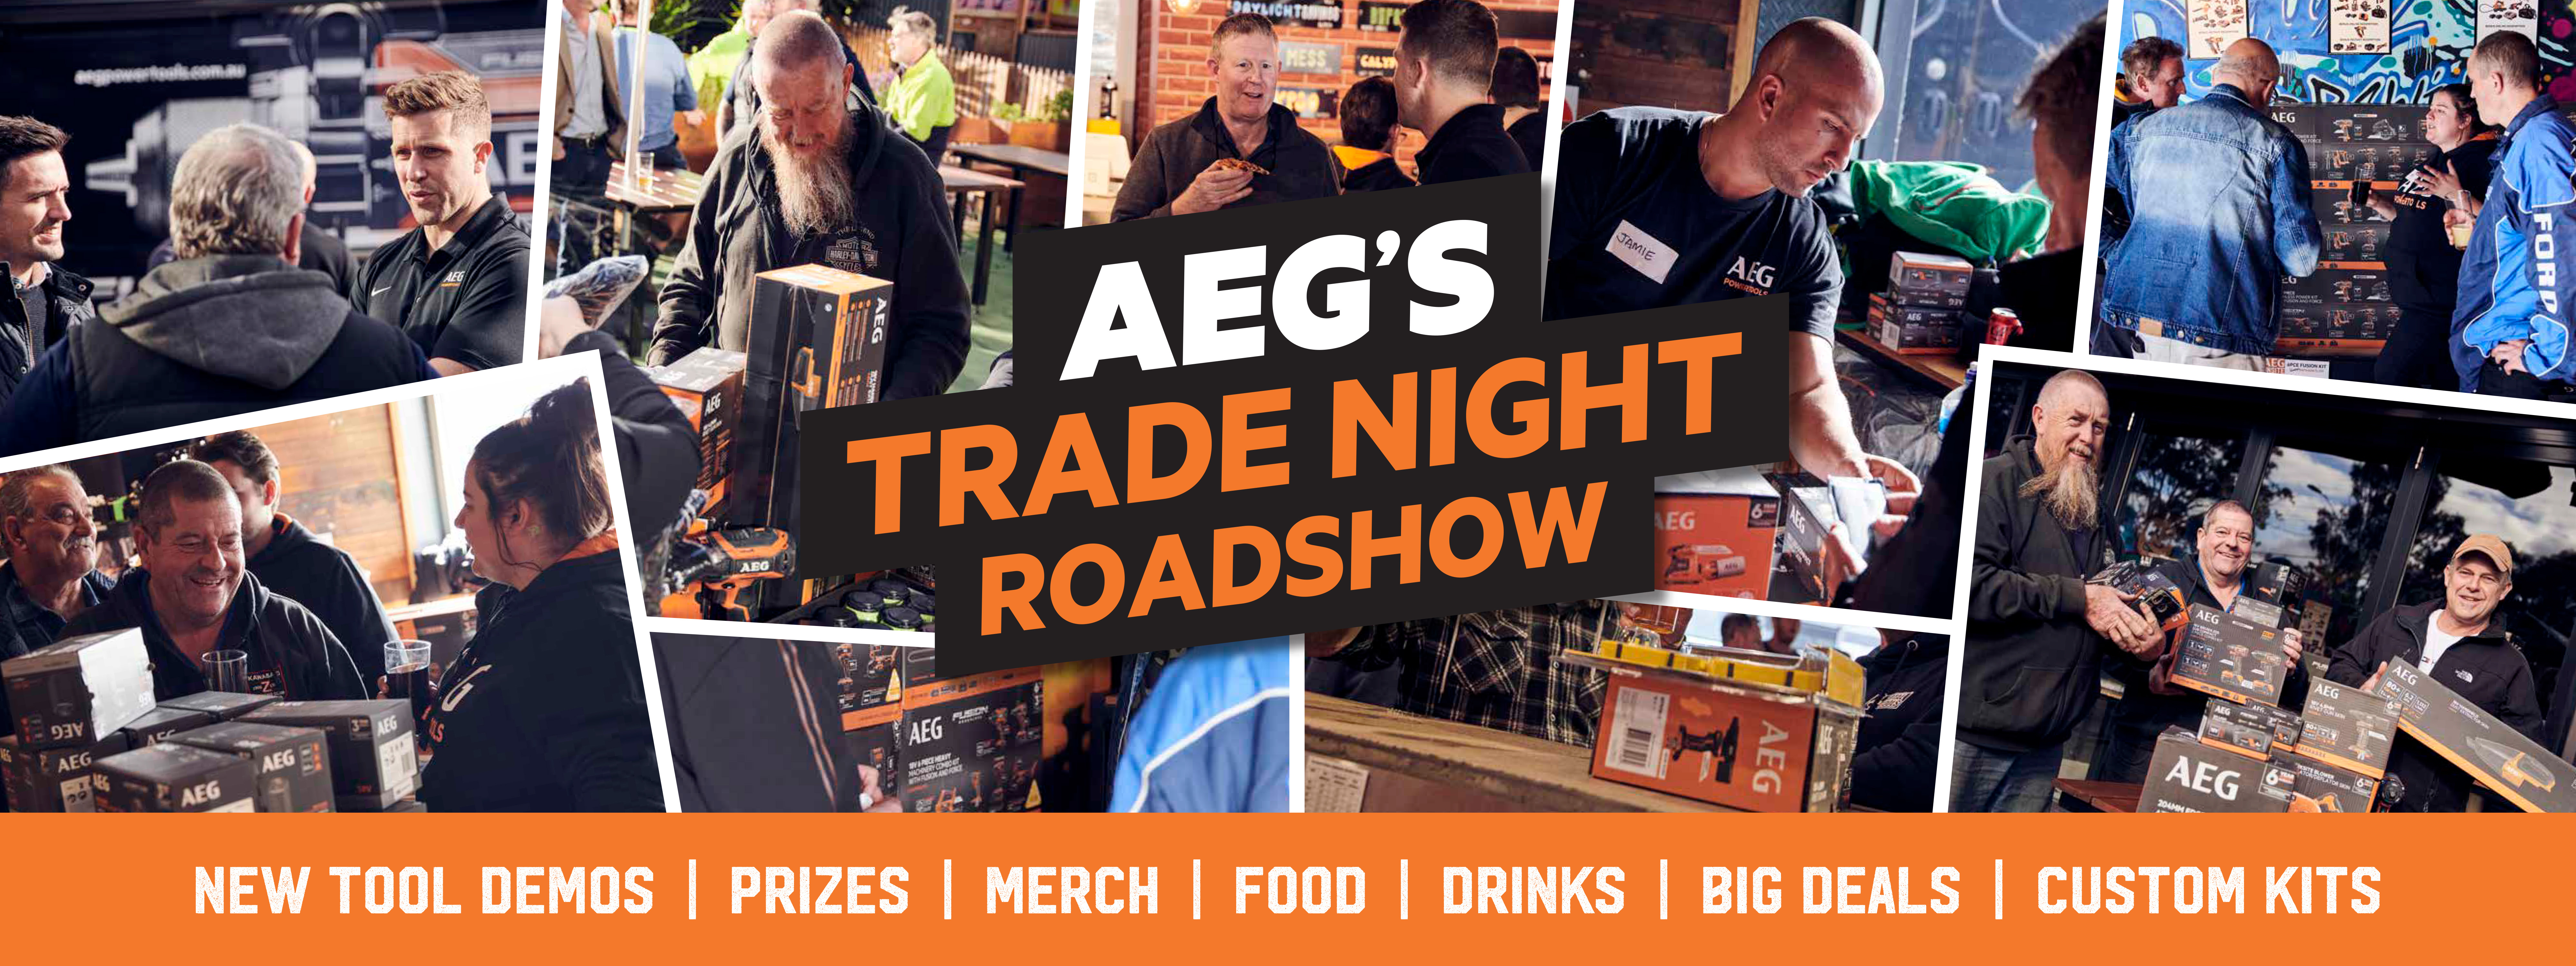 AEG's Trade Night Roadshow